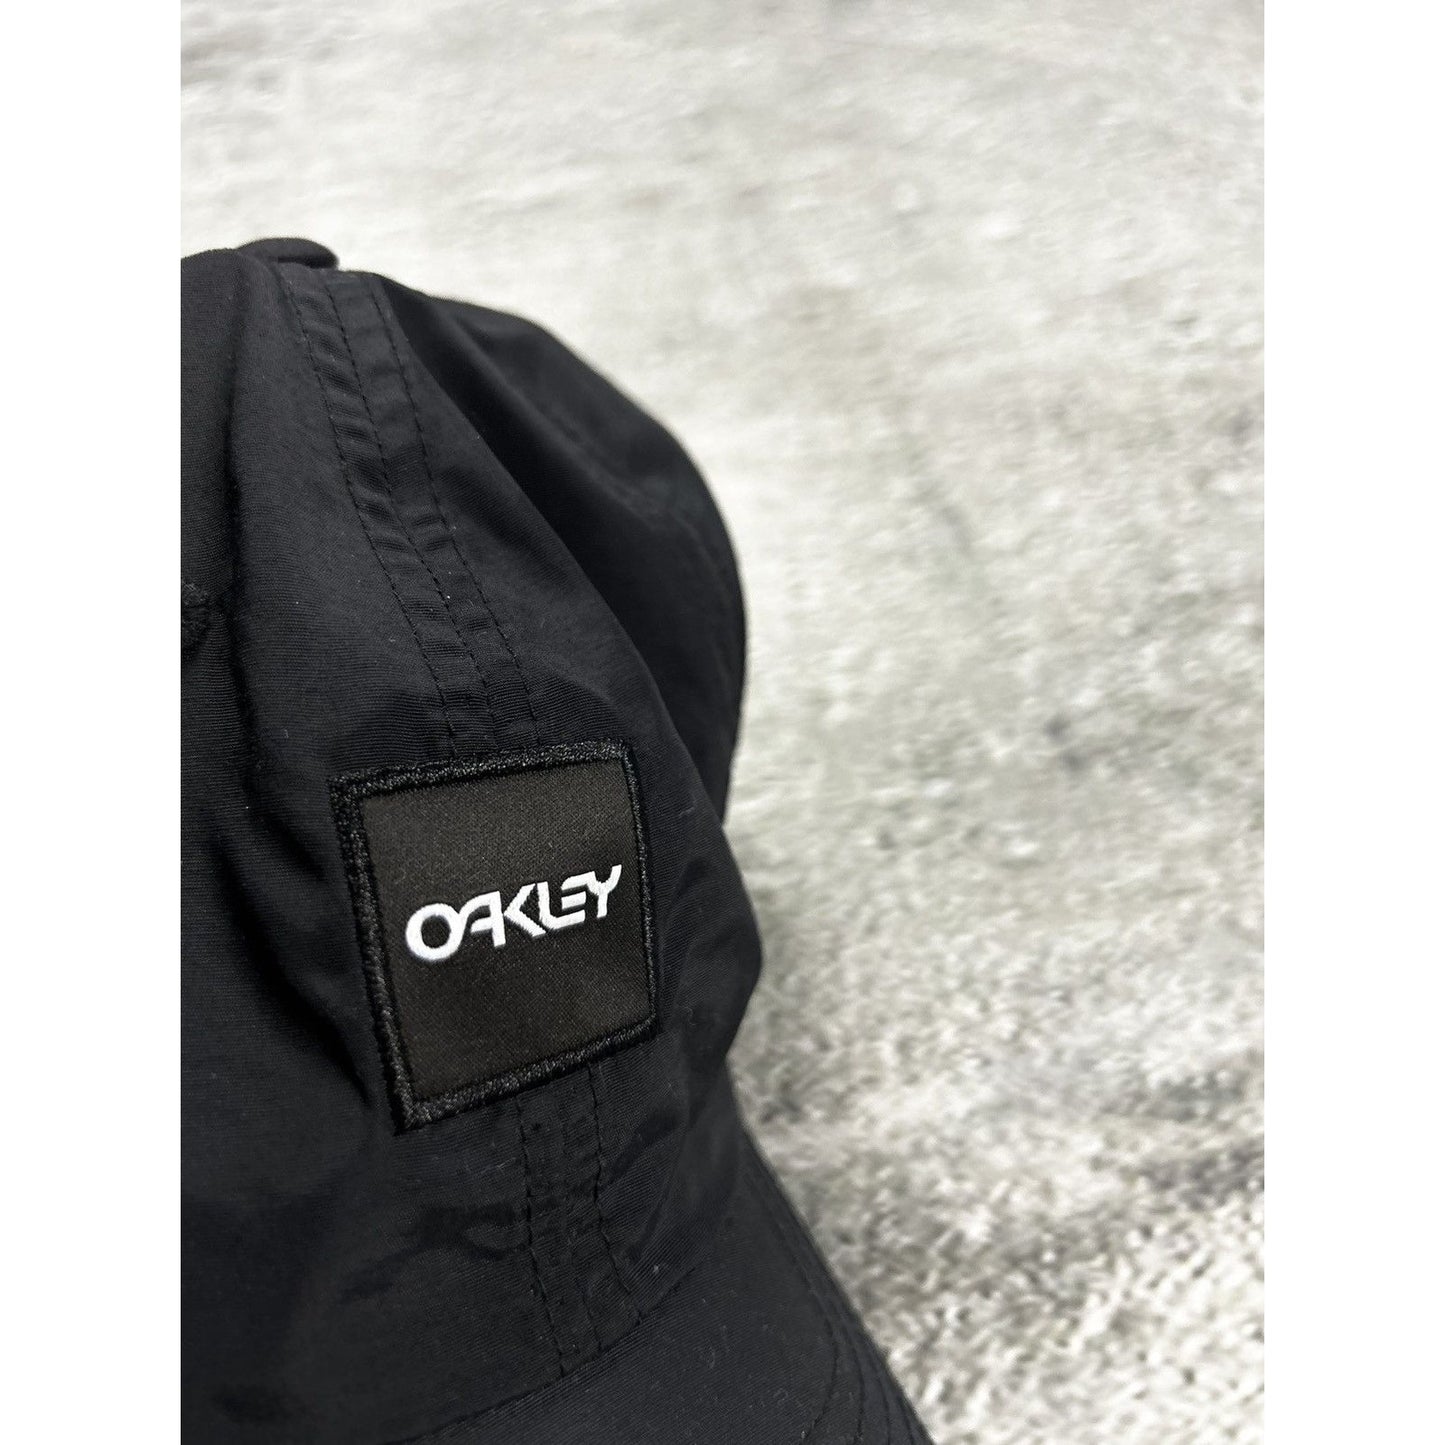 Oakley cap vintage black hat gorpcore